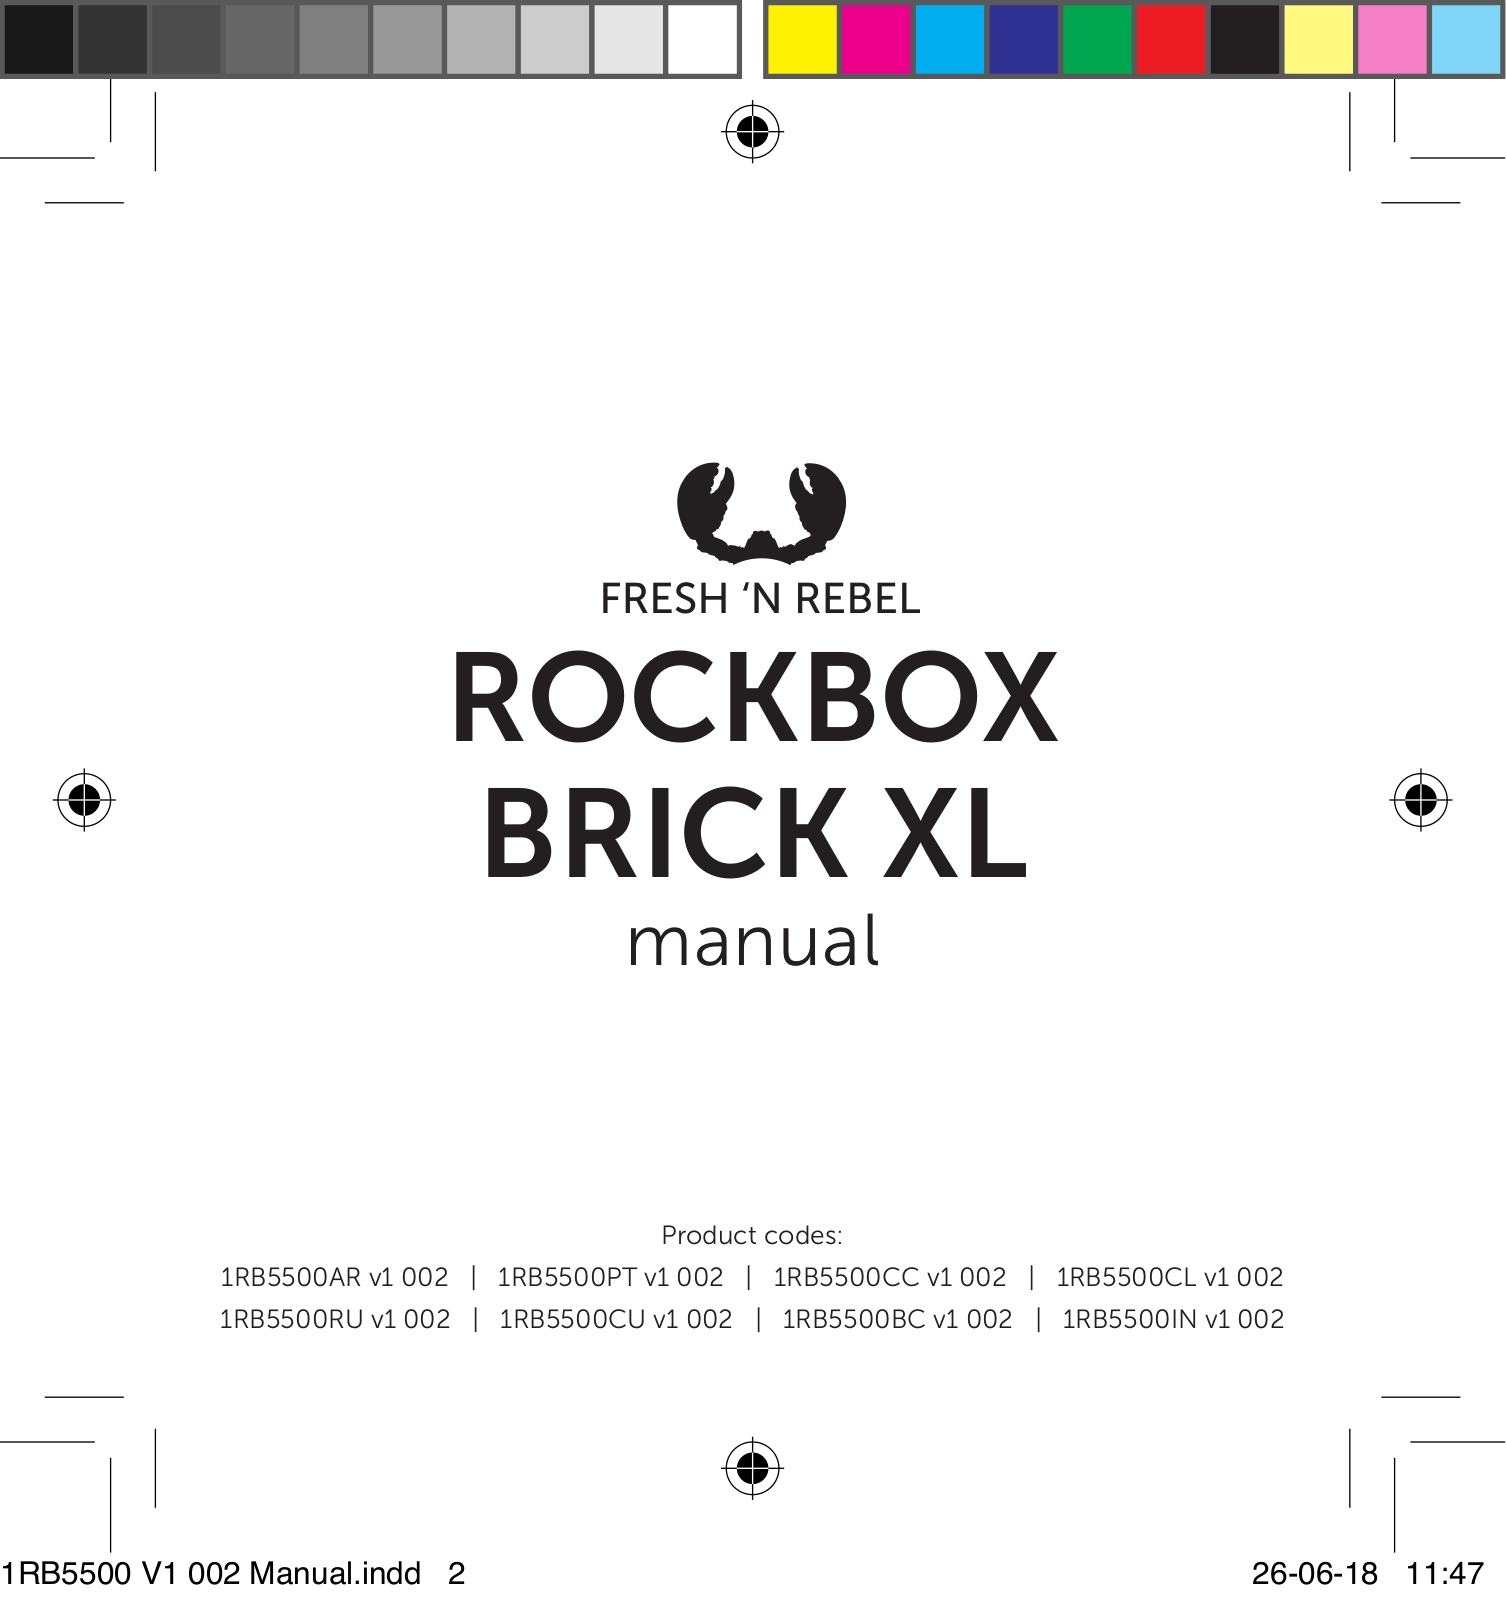 FRESH 'N REBEL ROCKBOX BRICK XL CONCRETE User Manual